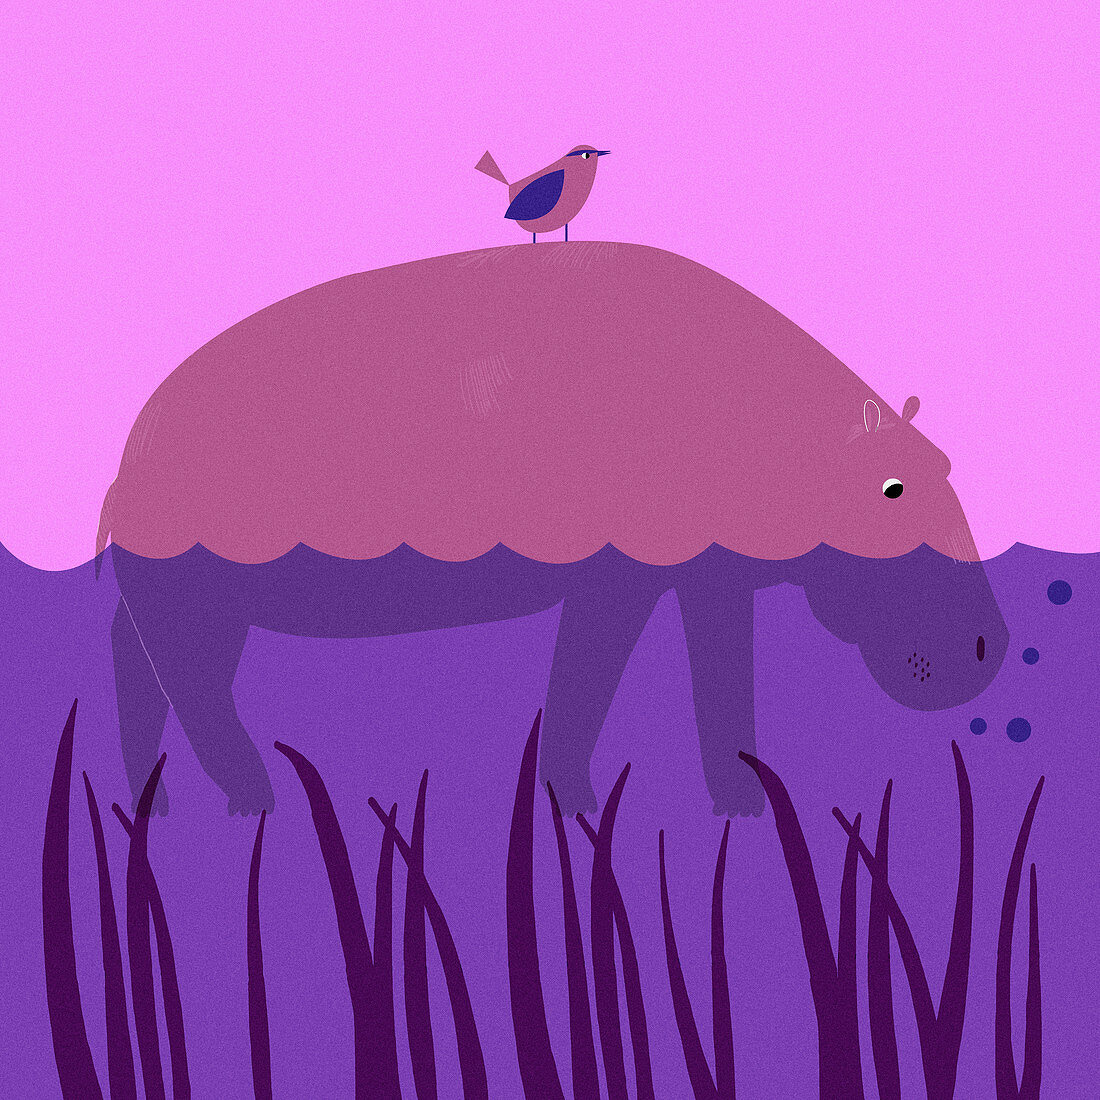 Bird on hippopotamus in river, illustration